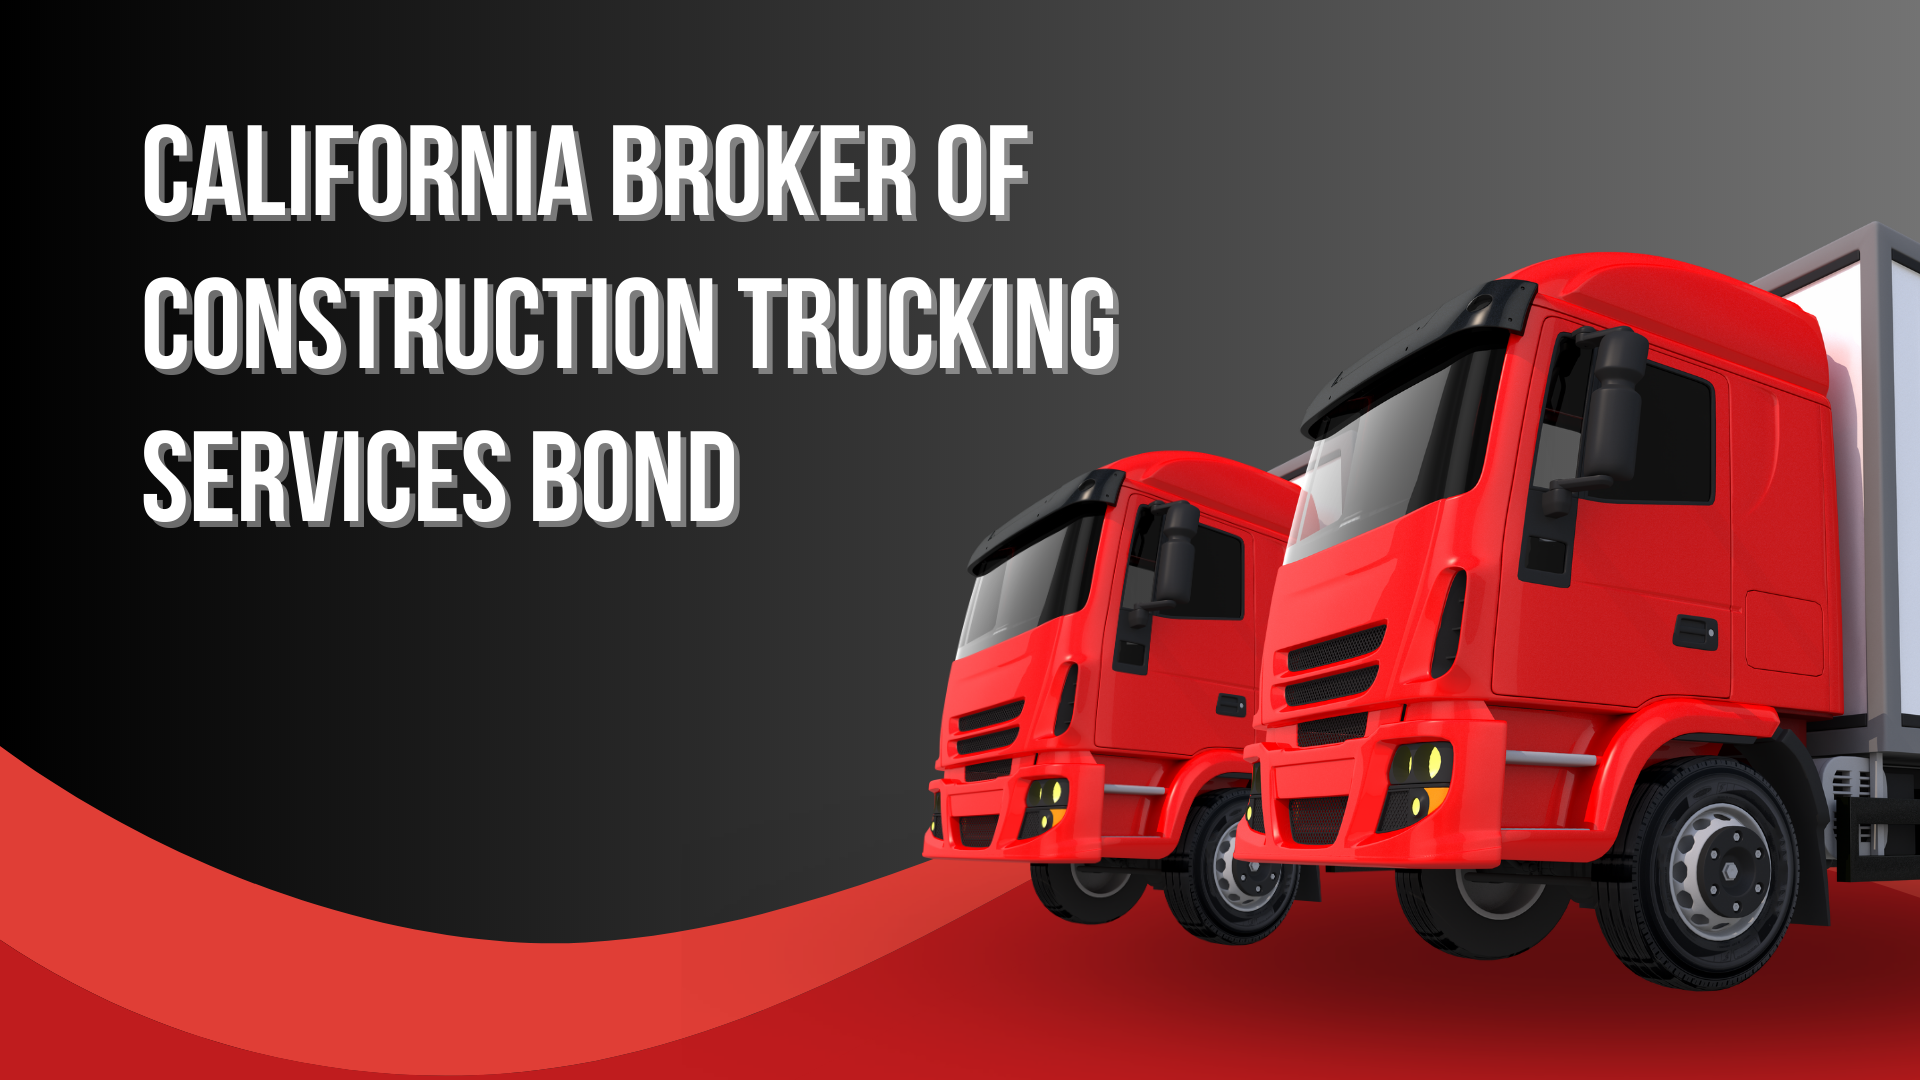 Surety Bond-California Broker of Construction Trucking Services Bond